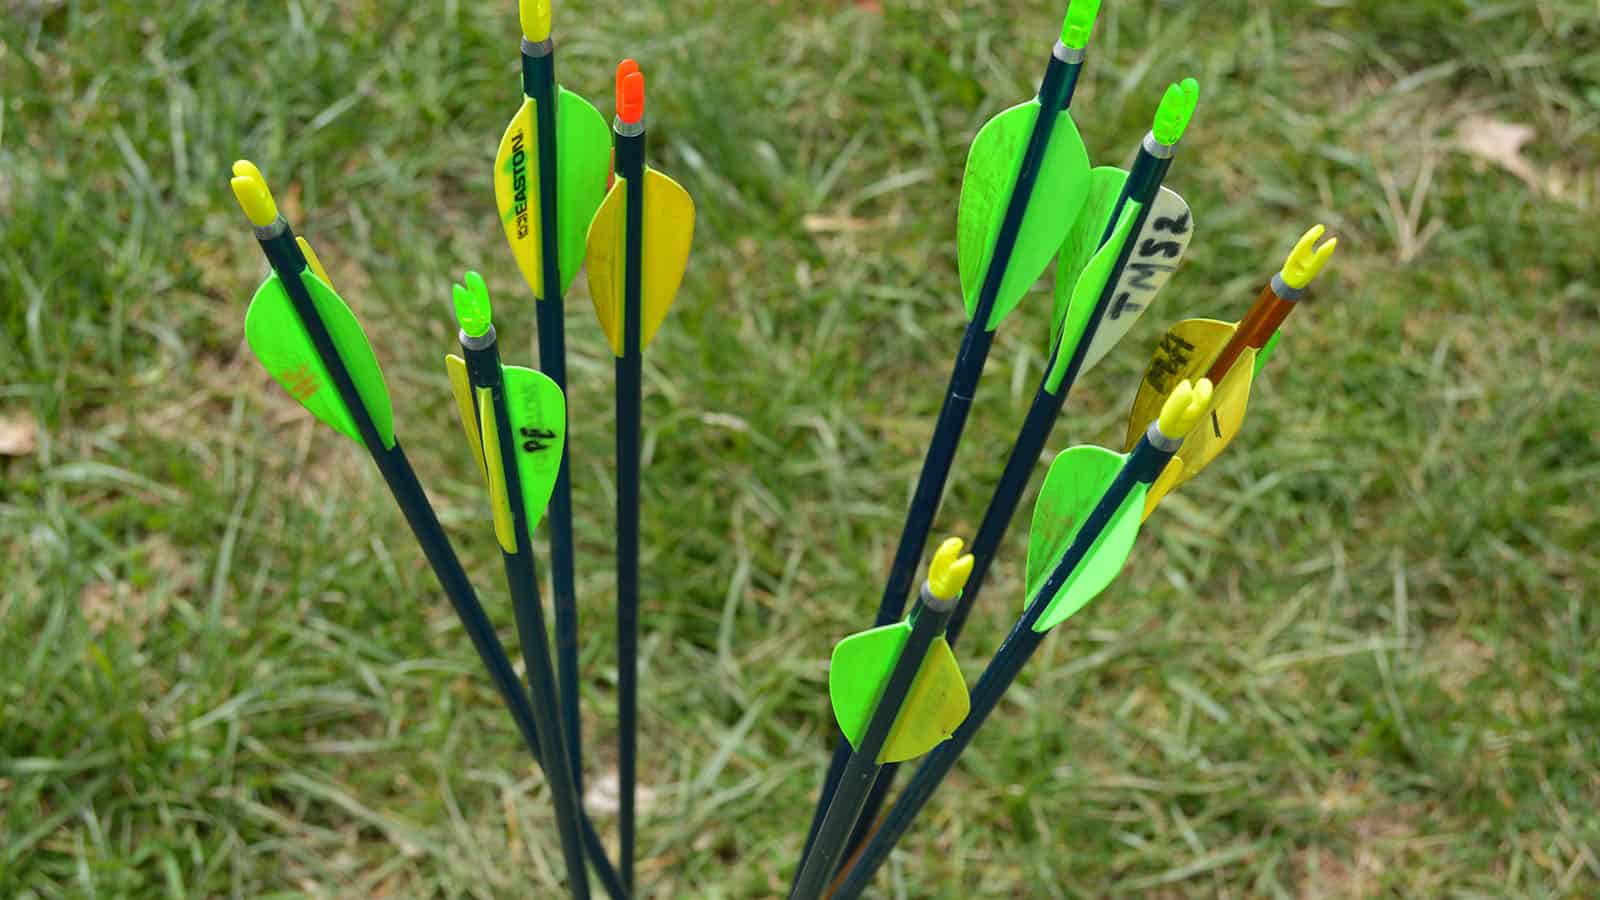 Select the Perfect Arrow Length for Your Bow - Draw Length vs Arrow Length